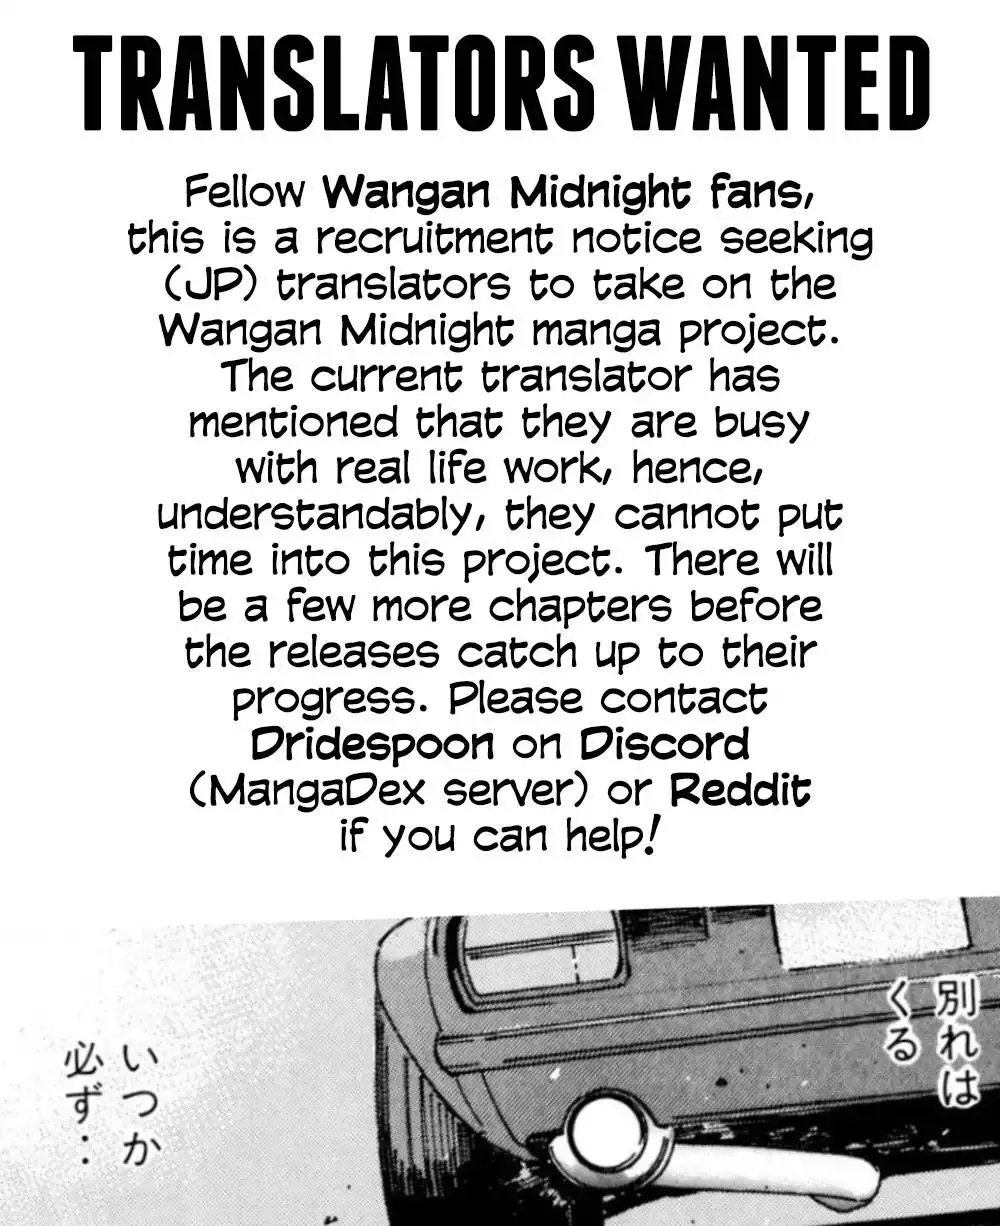 Wangan Midnight Chapter 120